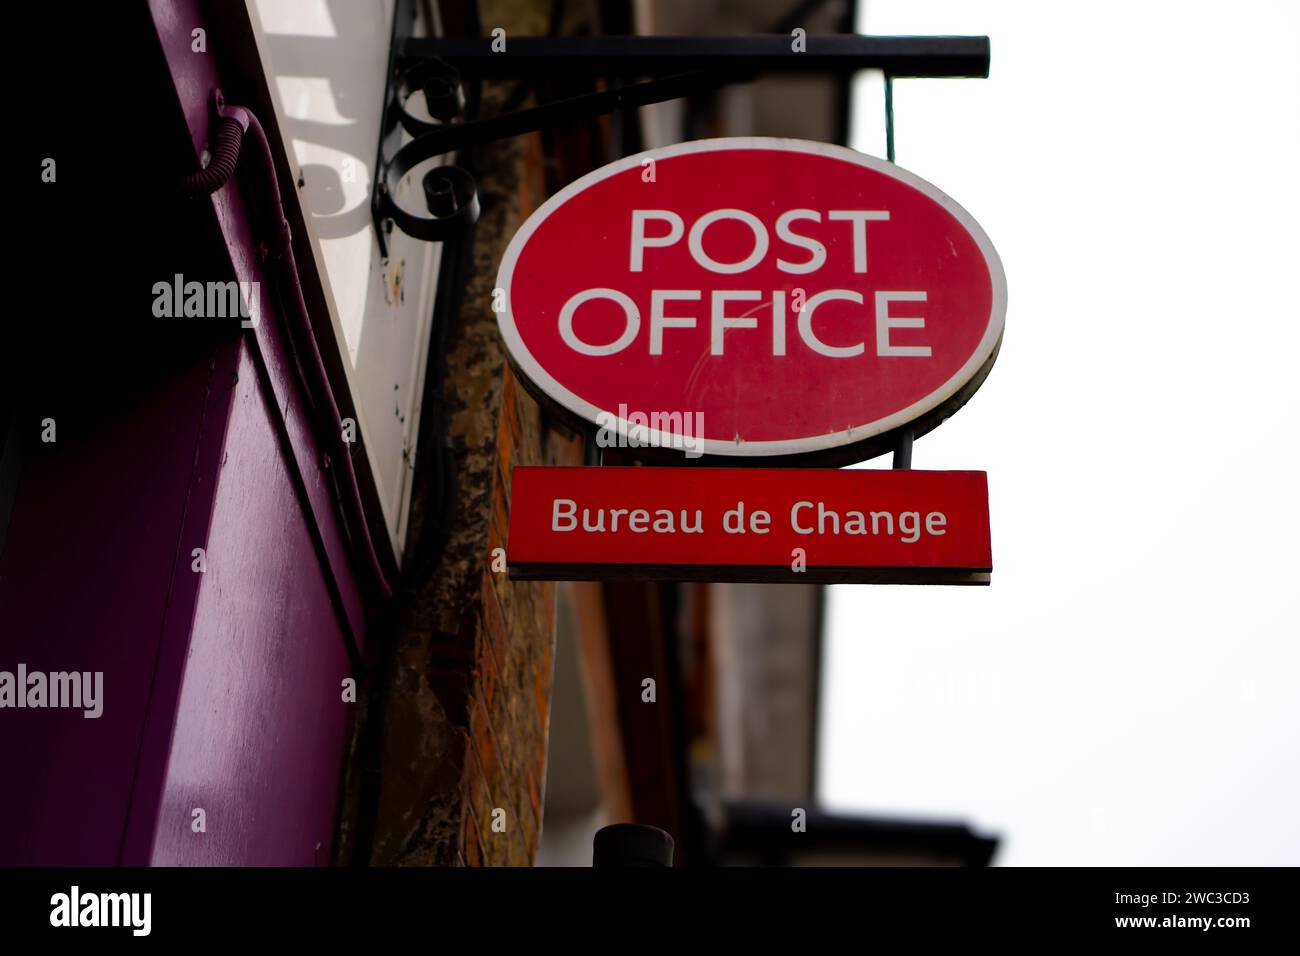 British Post Office hanging sign with Bureau de Change Stock Photo